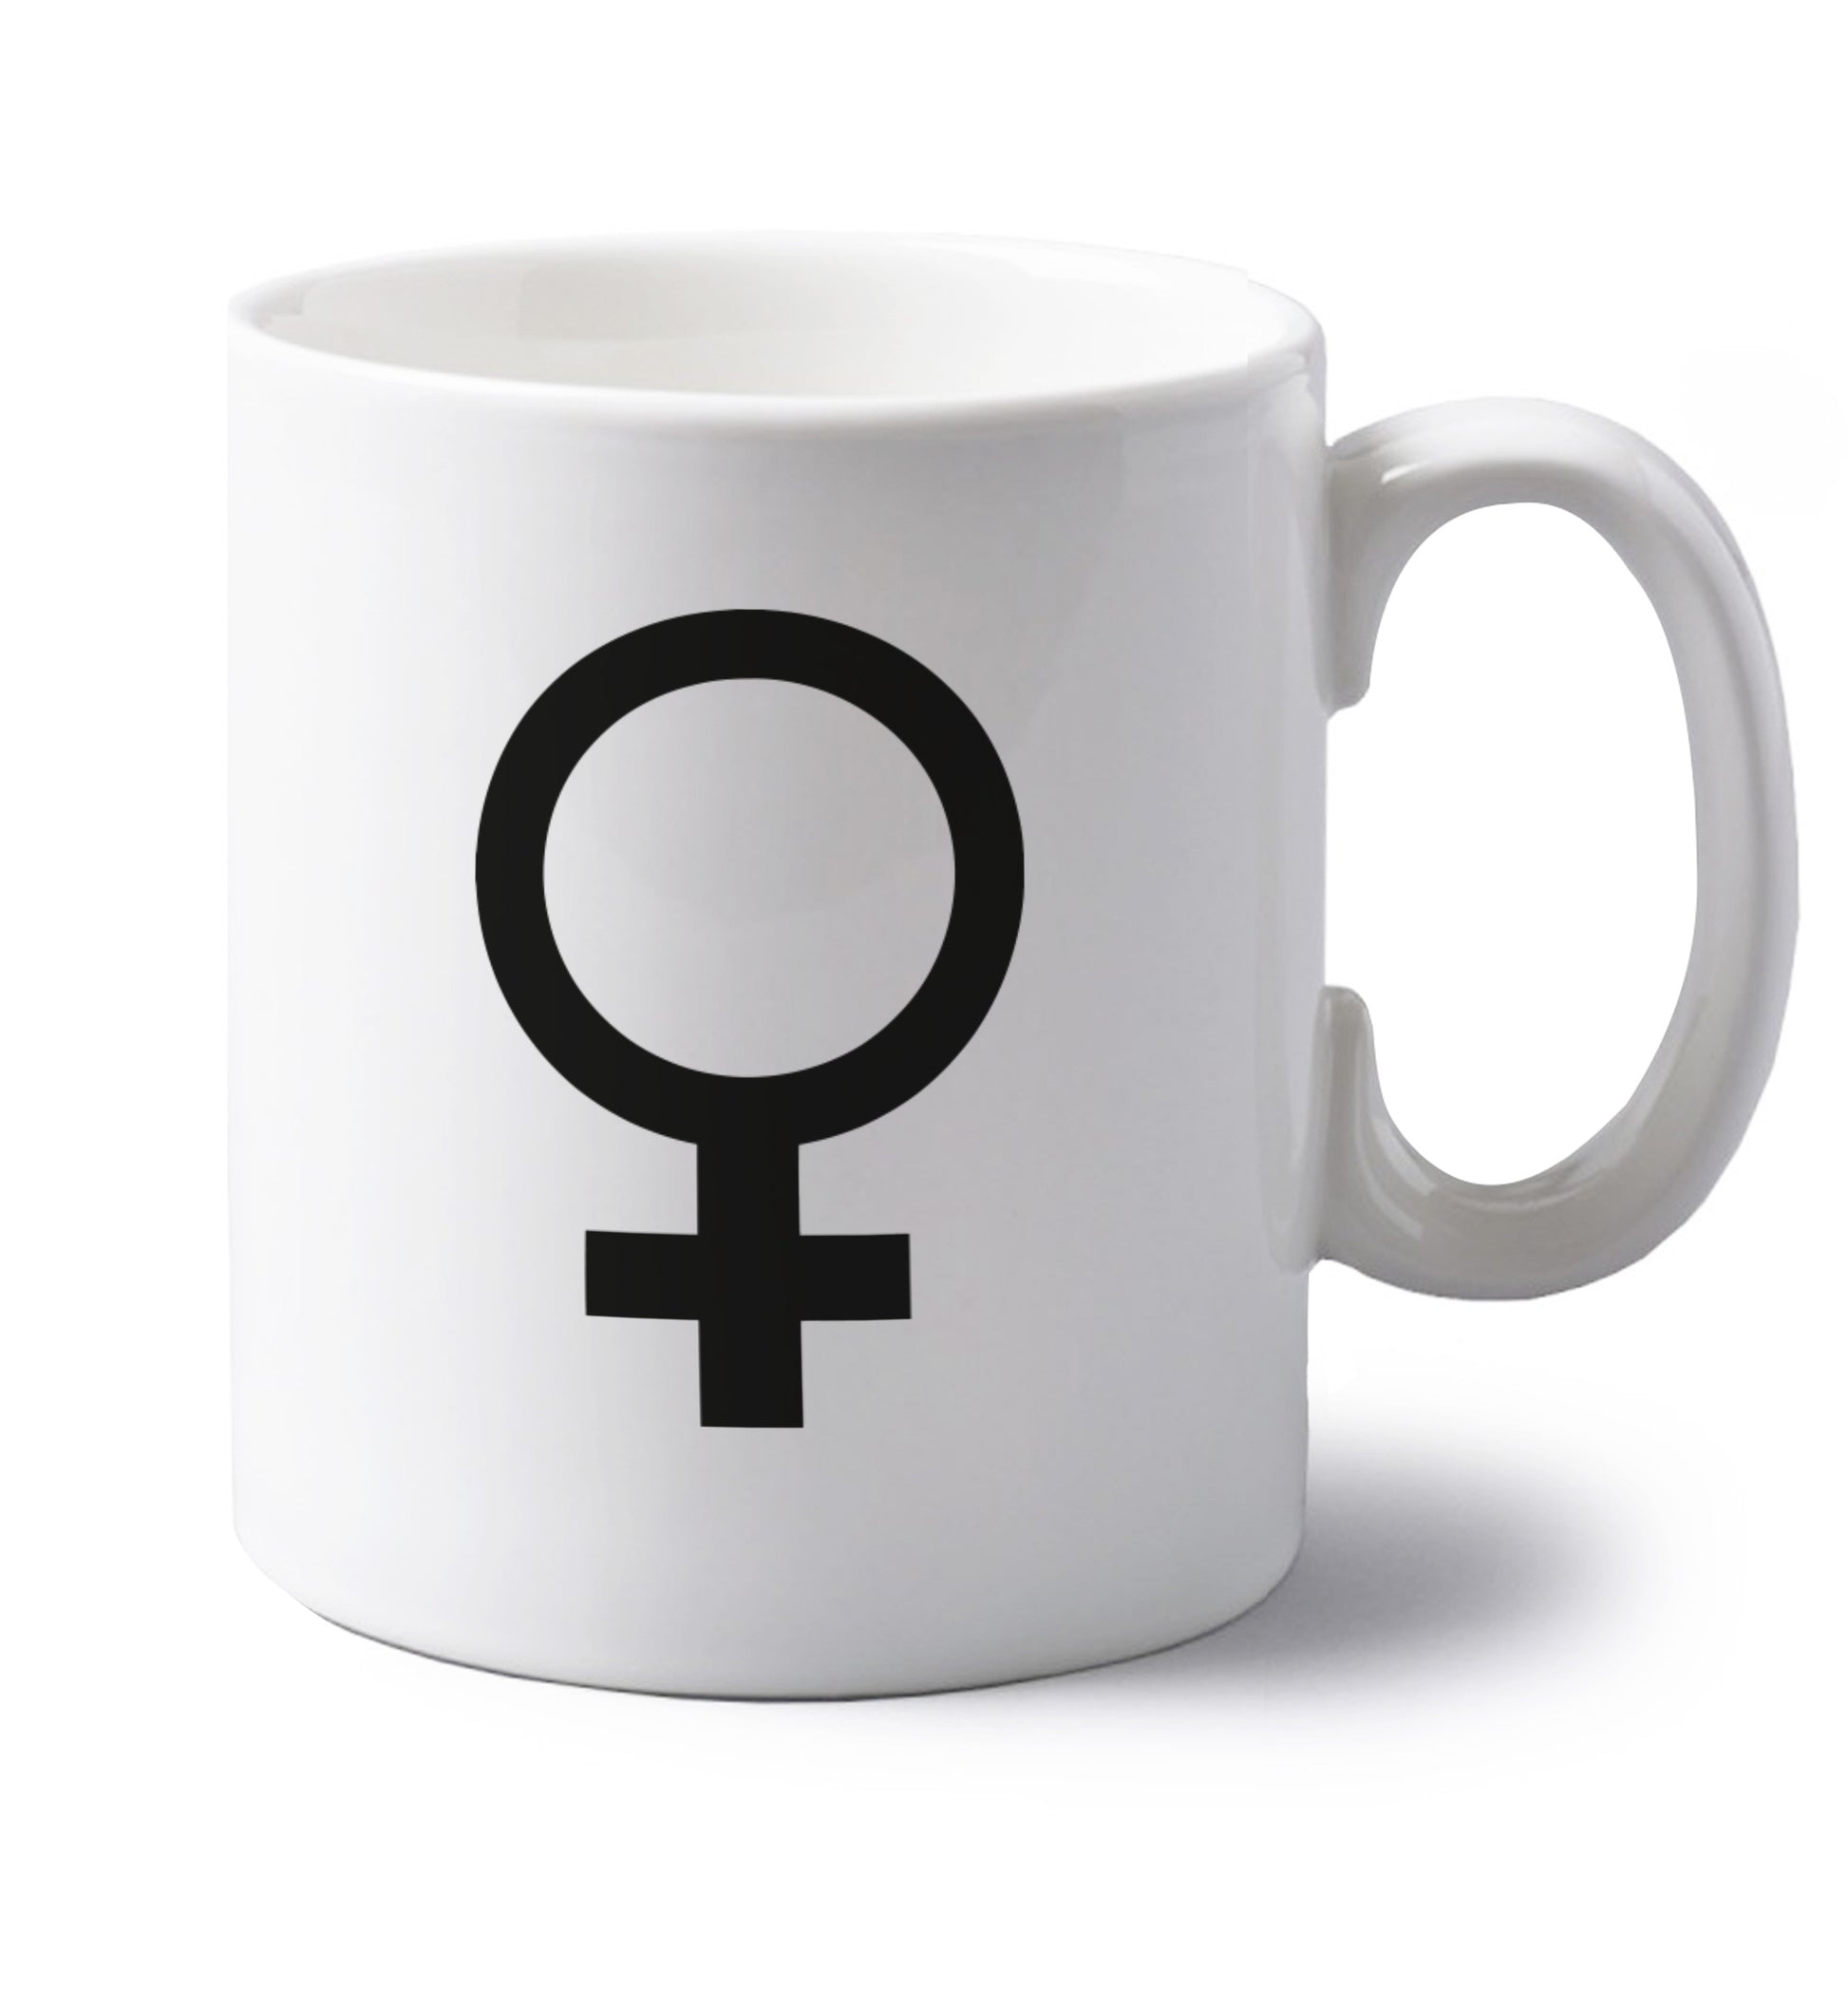 Female symbol large left handed white ceramic mug 